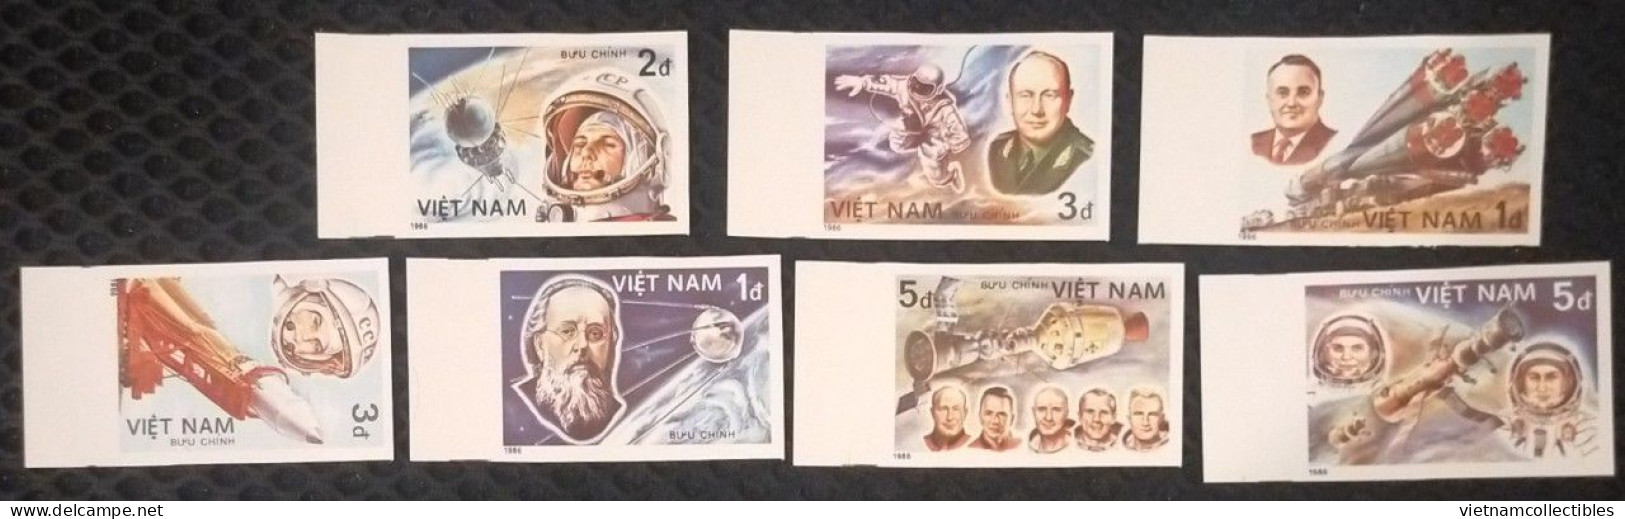 Vietnam Viet Nam MNH Imperf Stamps 1987 : 25th Anniversary Of 1st Manned Space Flight / Gagarin (Ms515) - Vietnam